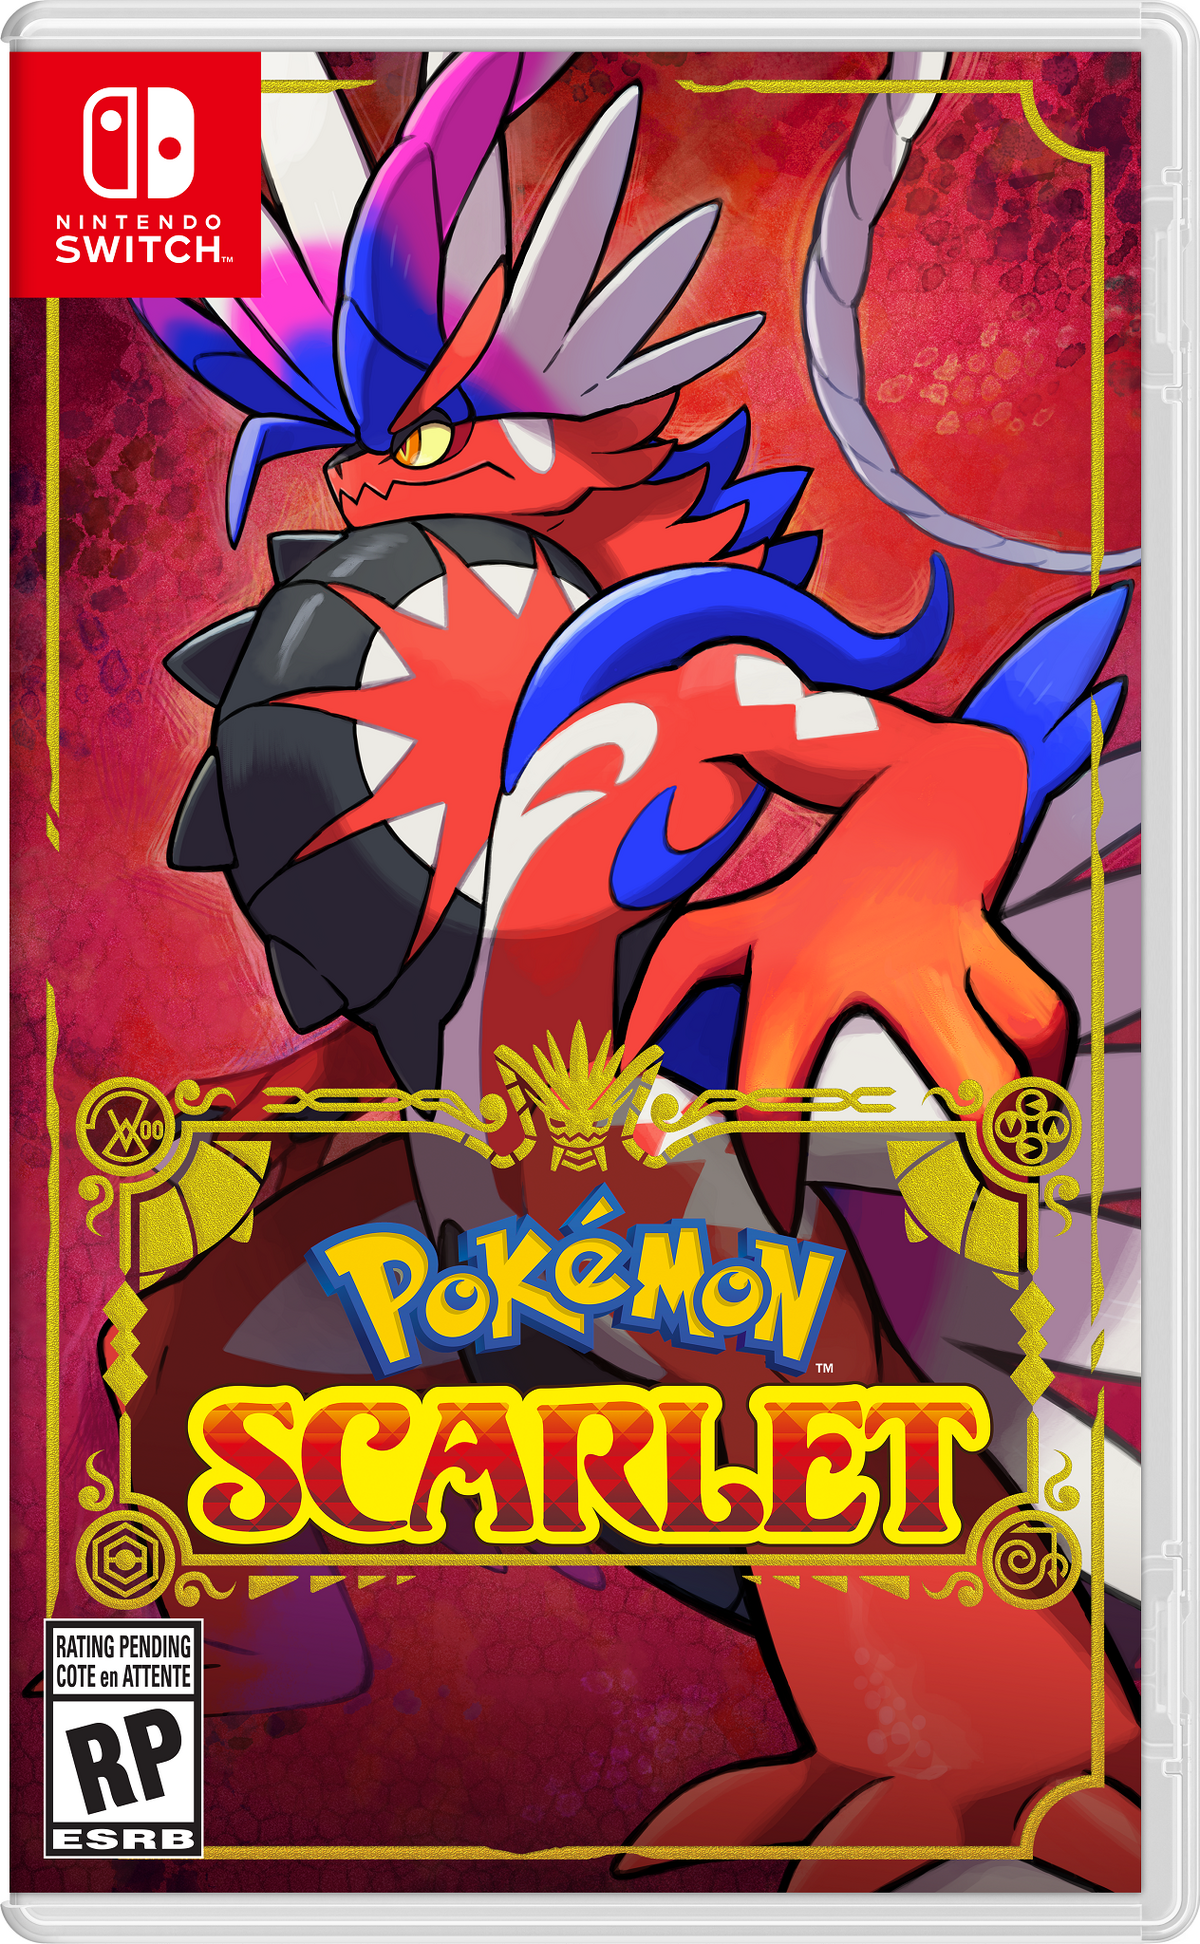 6 IV Shiny Quaquaval With Master Ball Pokemon Scarlet Violet